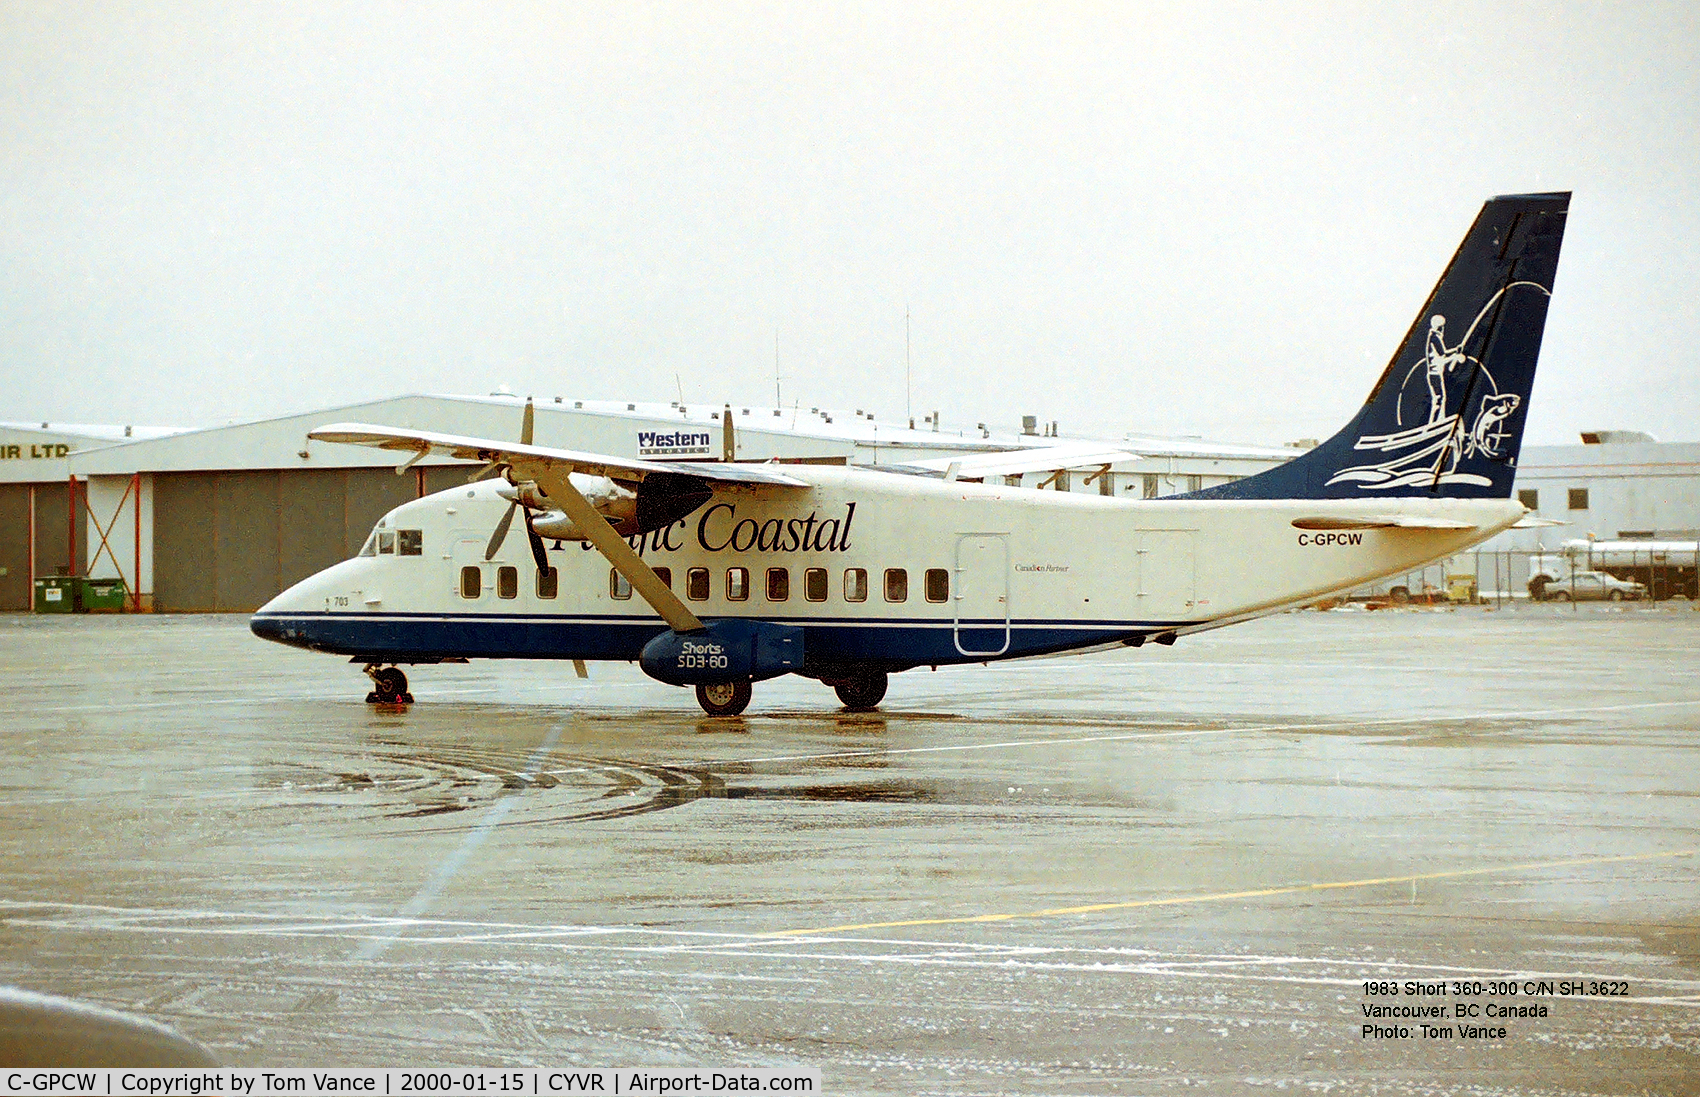 C-GPCW, 1983 Short 360-300 C/N SH.3622, At CYVR Pacific Coastal Ramp Jan 15 2000